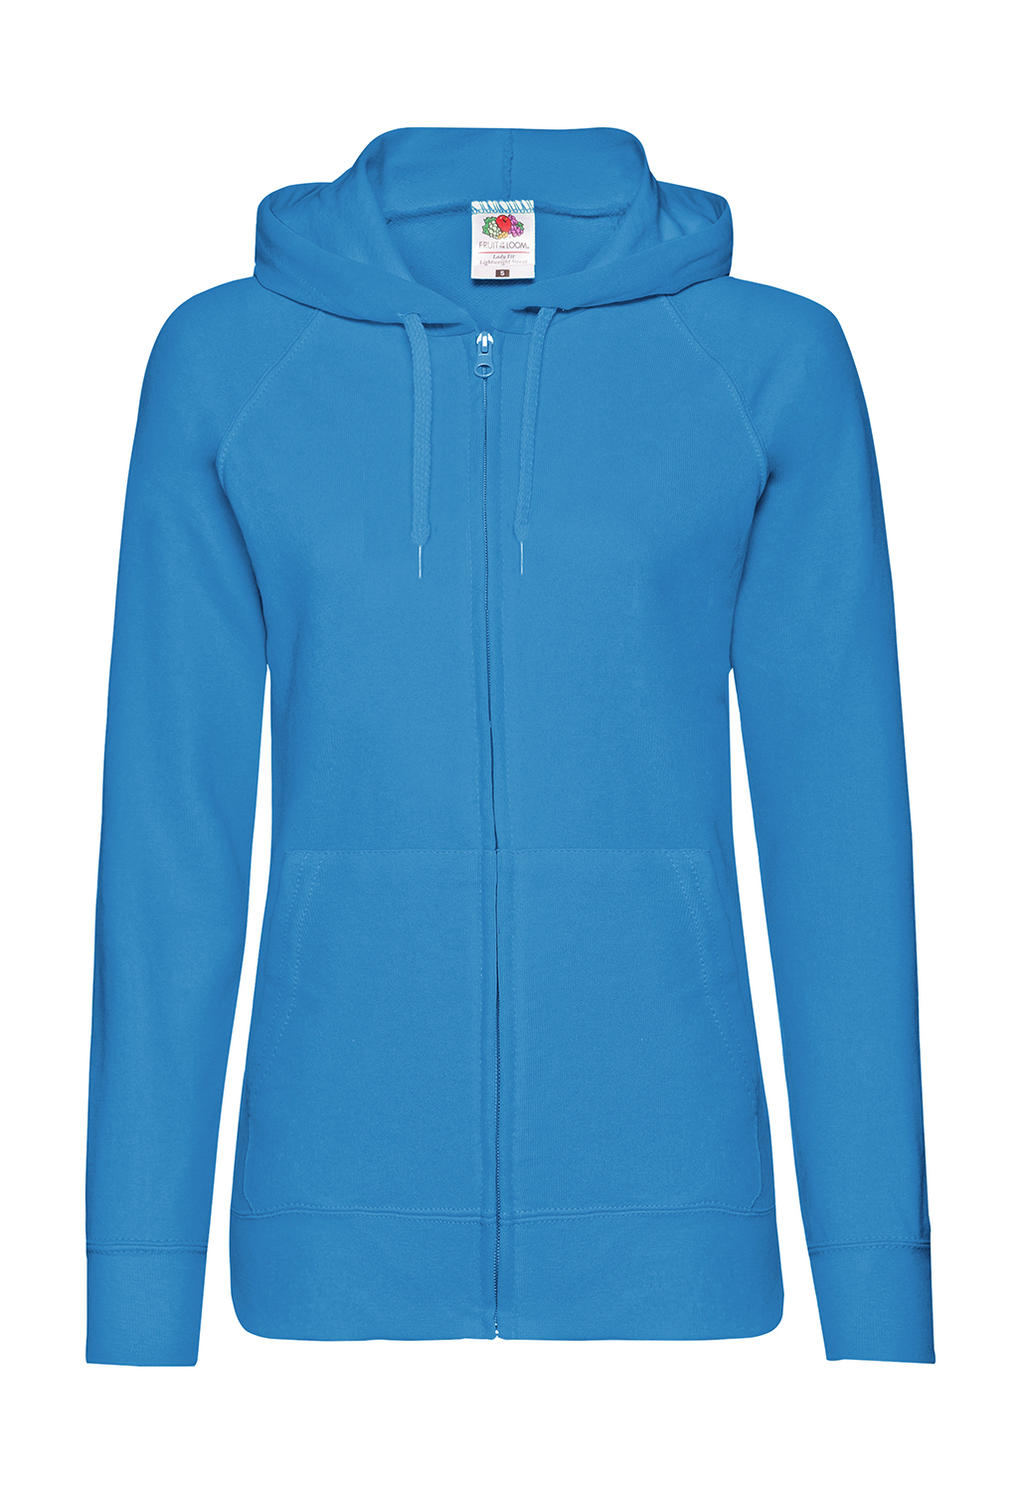  Ladies Lightweight Hooded Sweat Jacket in Farbe Azure Blue